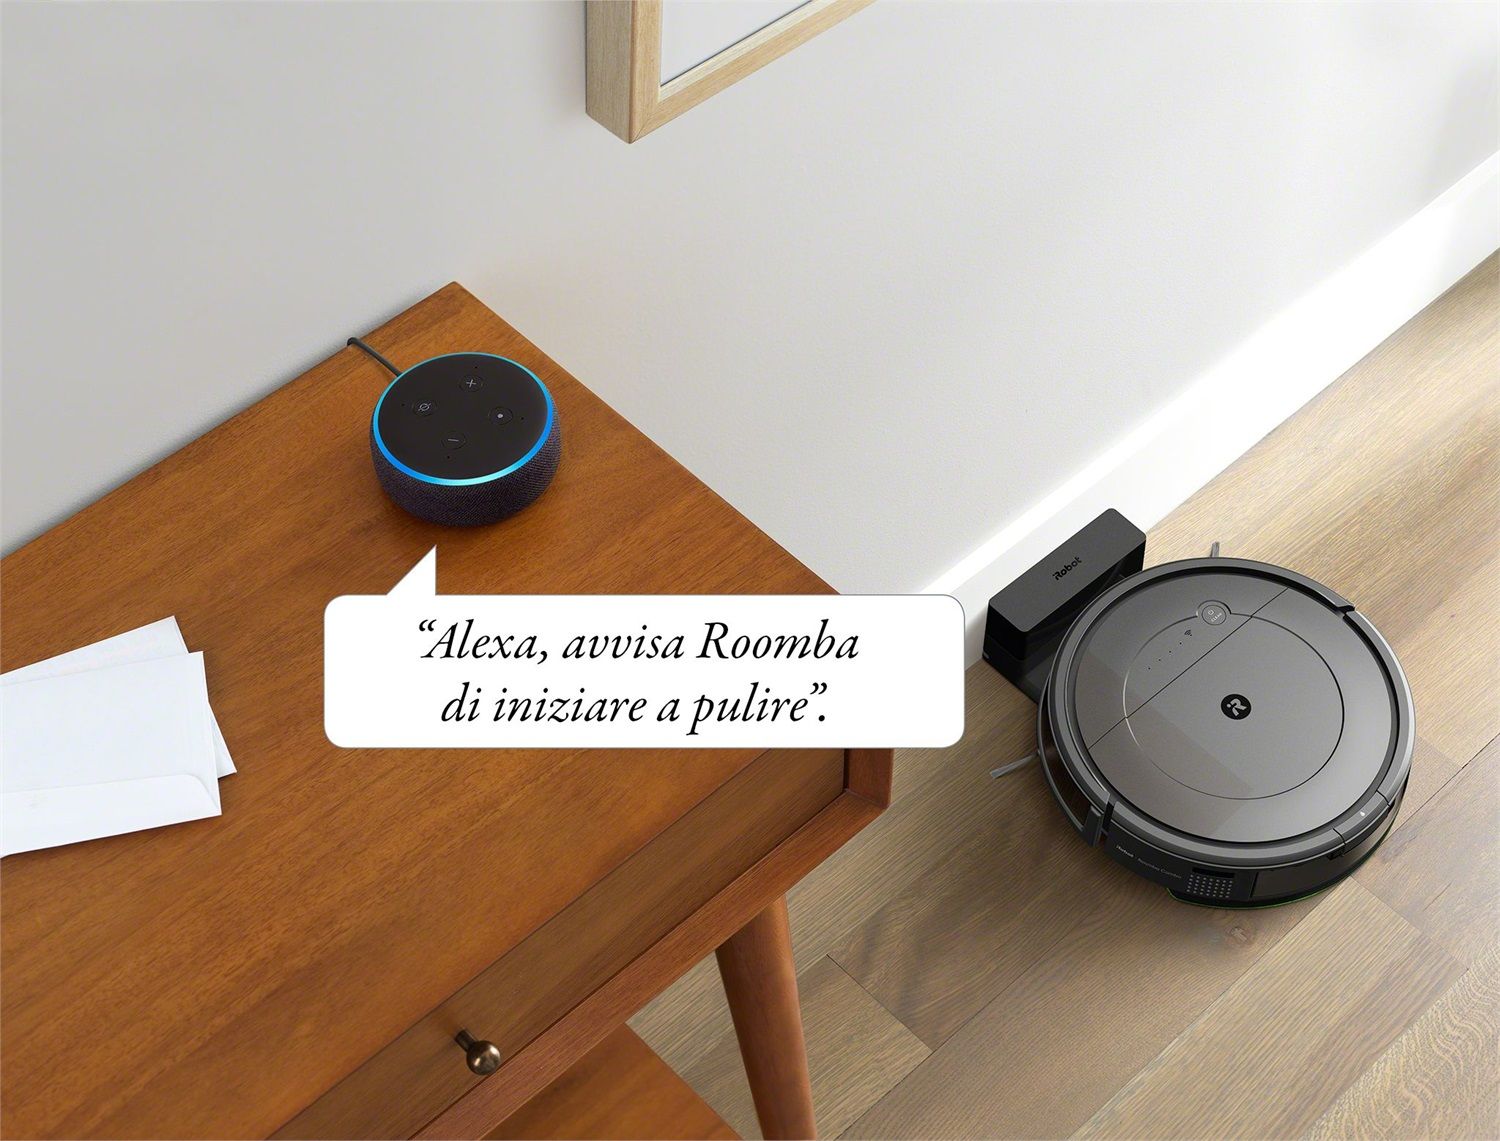 iRobot Roomba I5 Combo aspirapolvere e lavapavimenti con kit